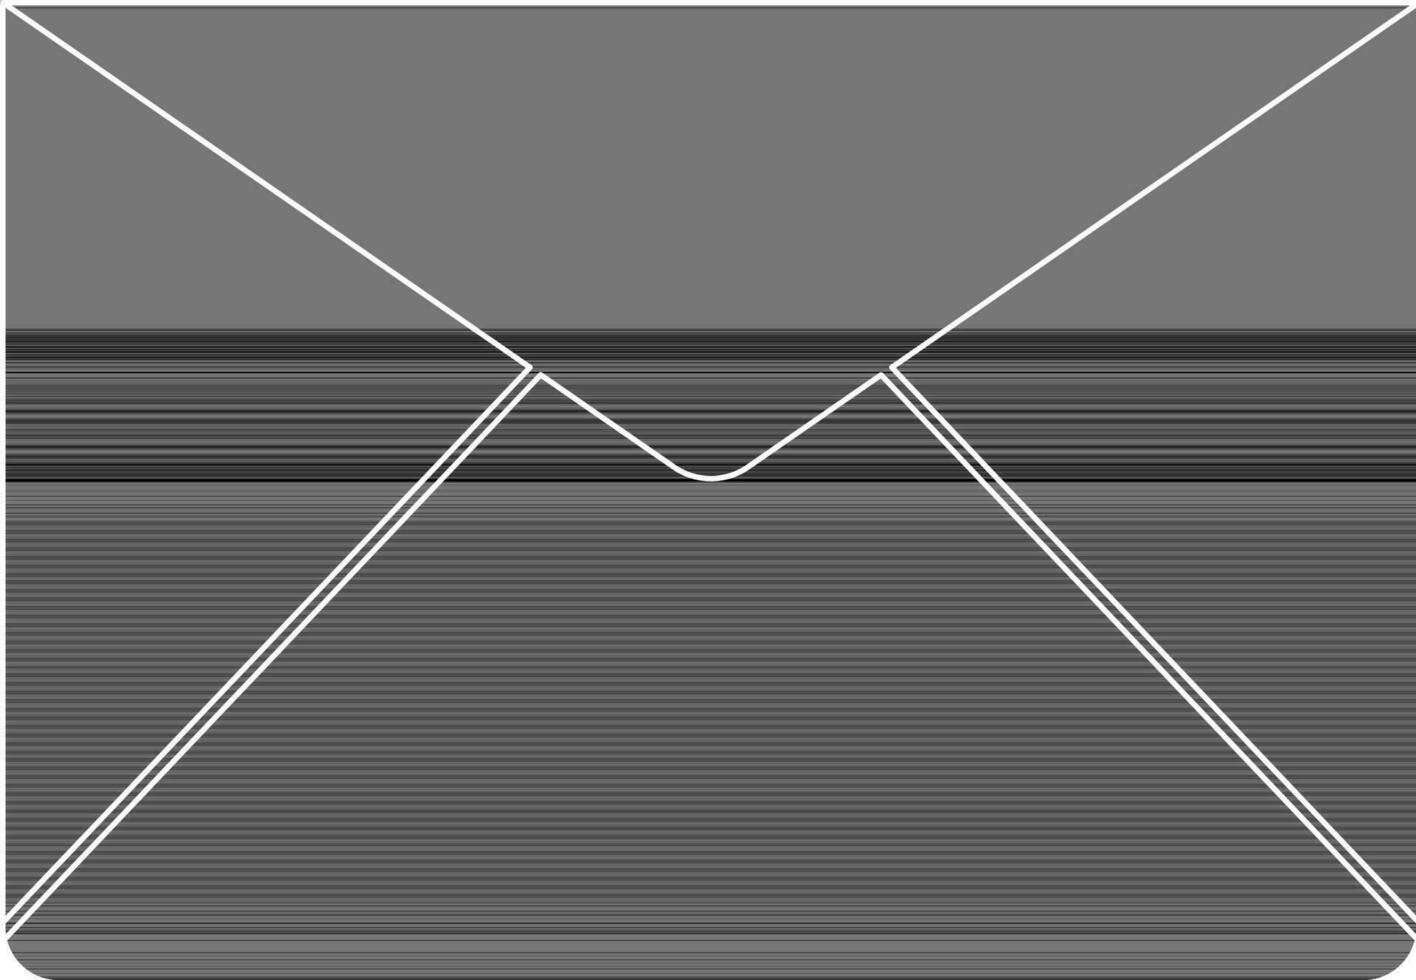 Envelope in flat style. vector